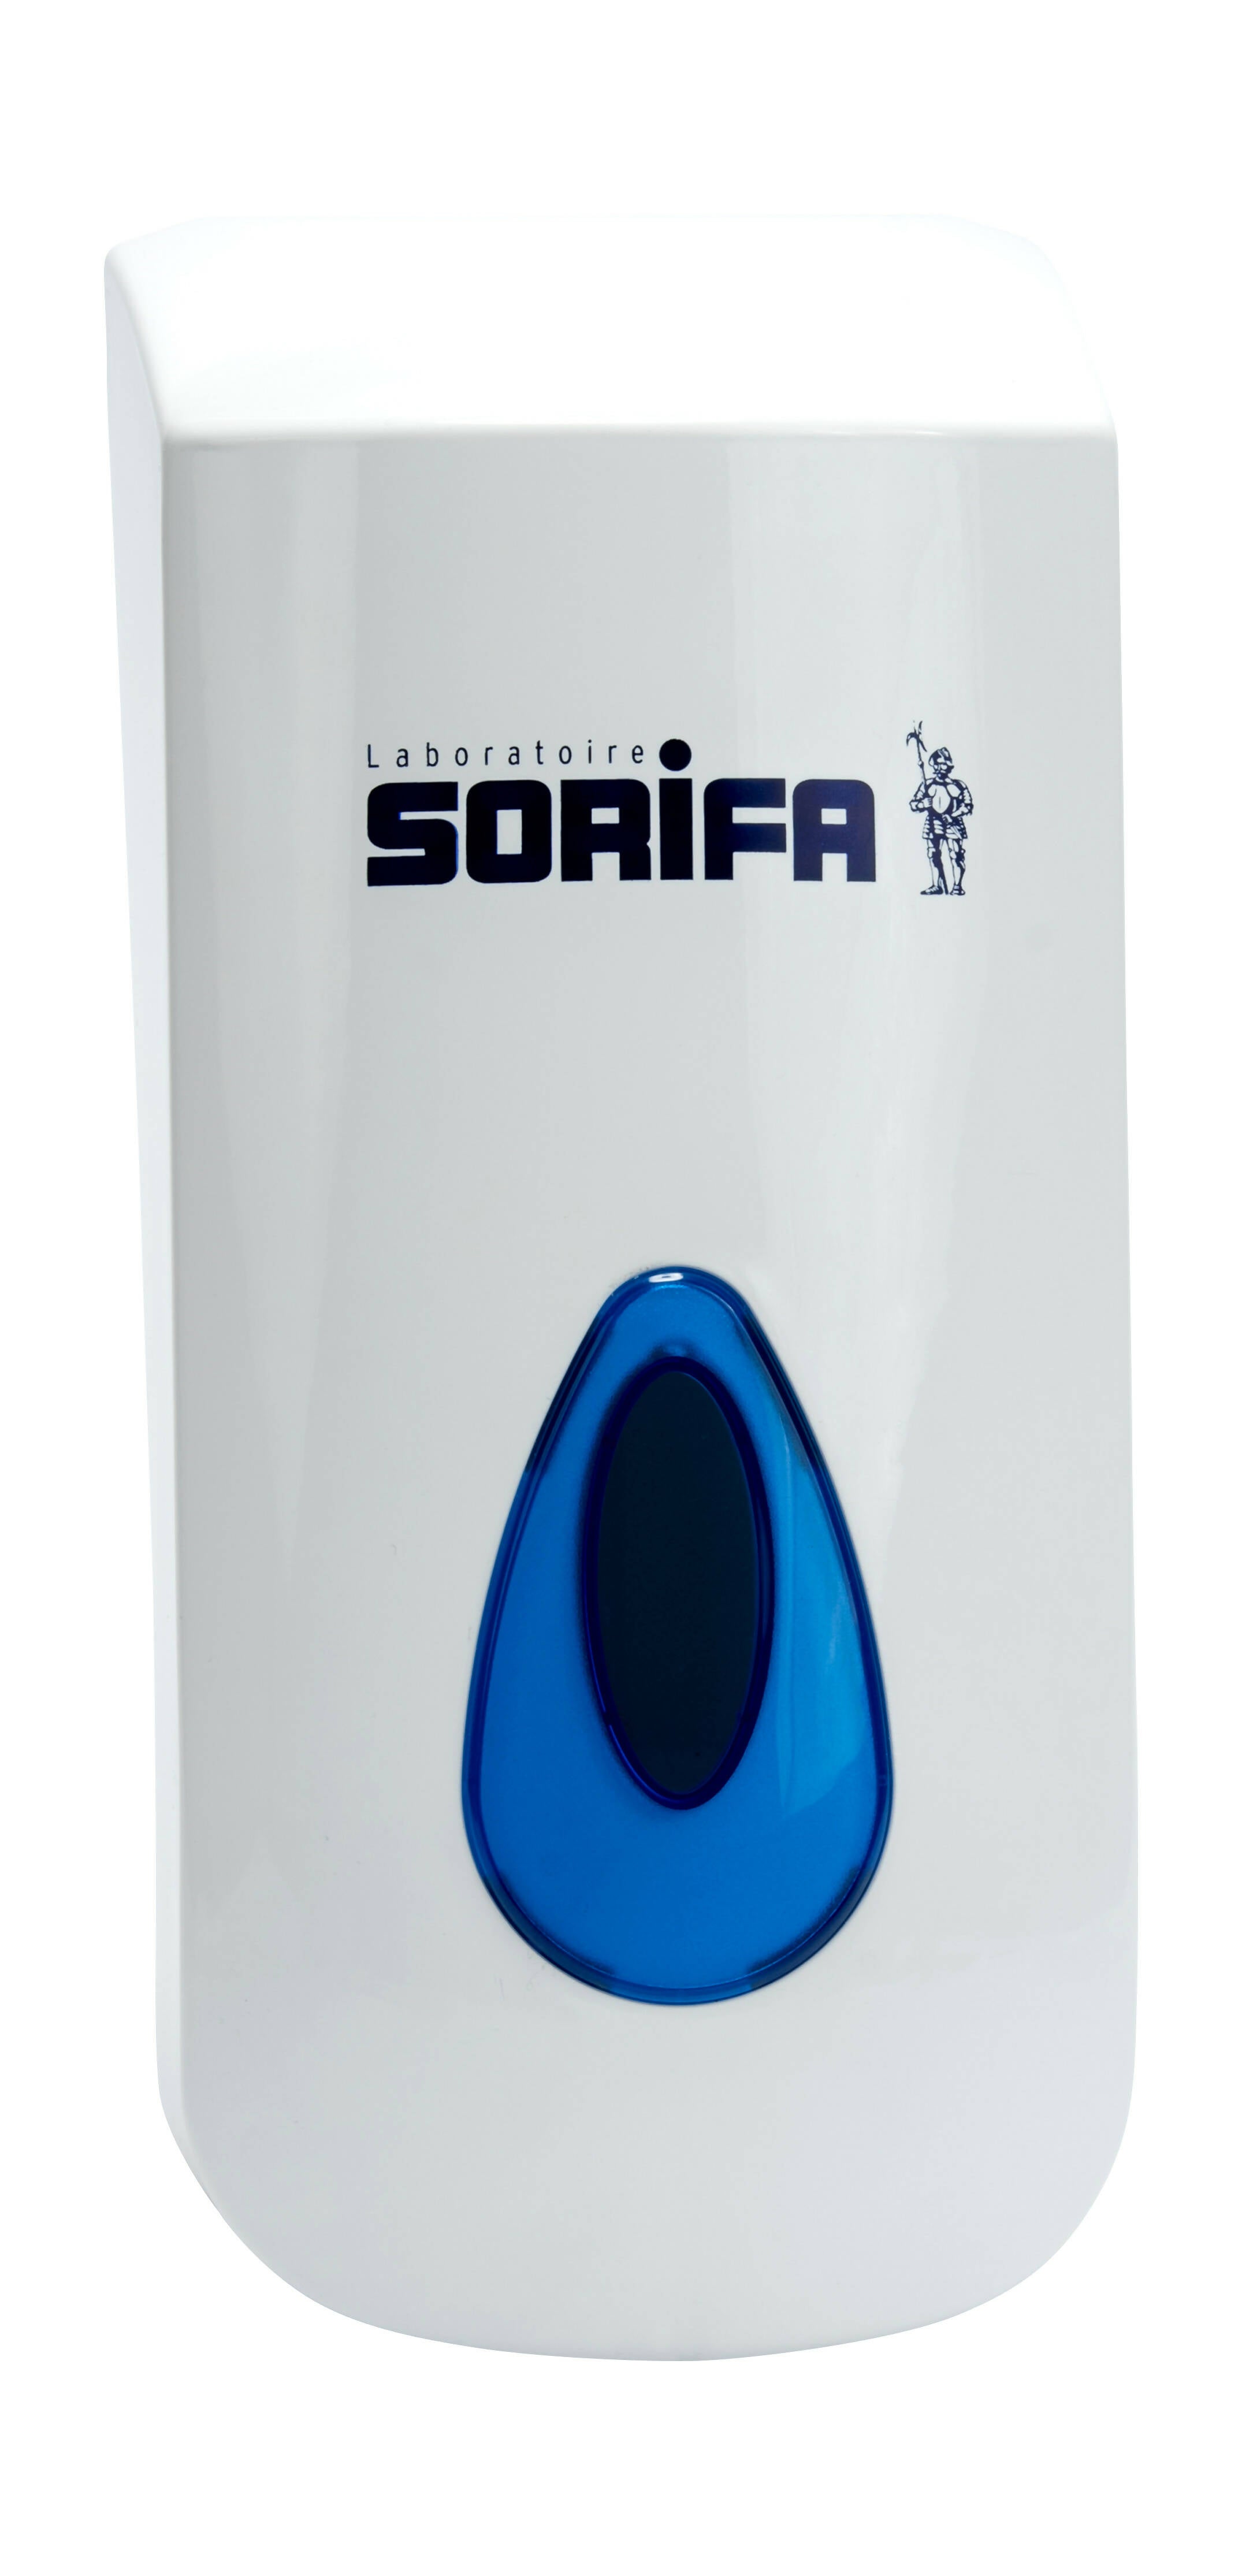 SORIFA - Set of 5 - Robust, ergonomic, lockable metal wall dispenser for 1L SORIFA brand bottle - For gels and liquid soaps.